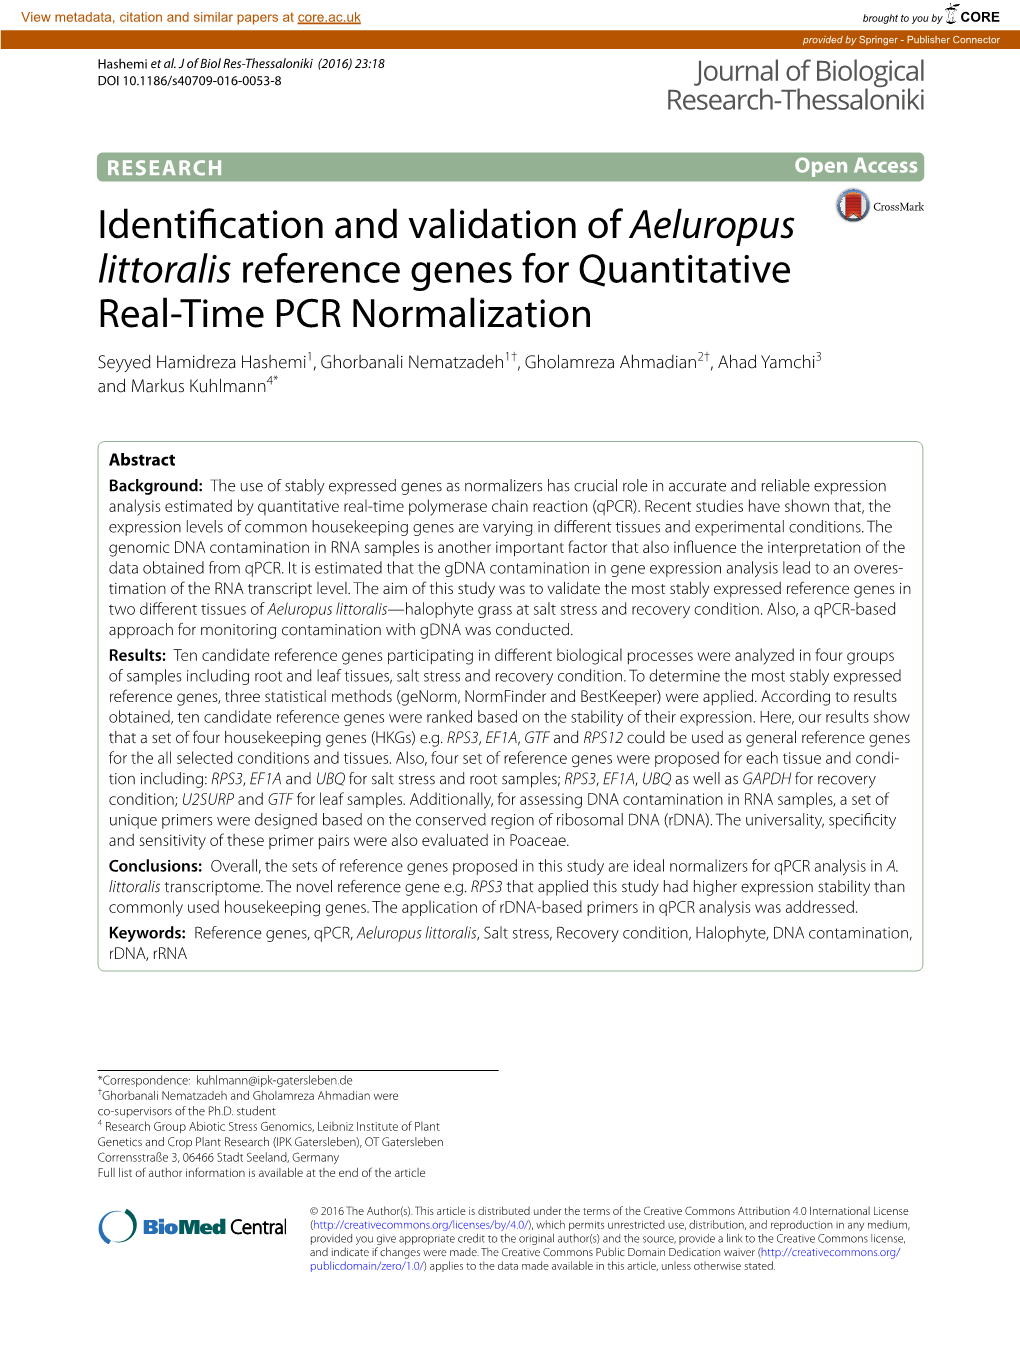 Identification and Validation of Aeluropus Littoralis Reference Genes